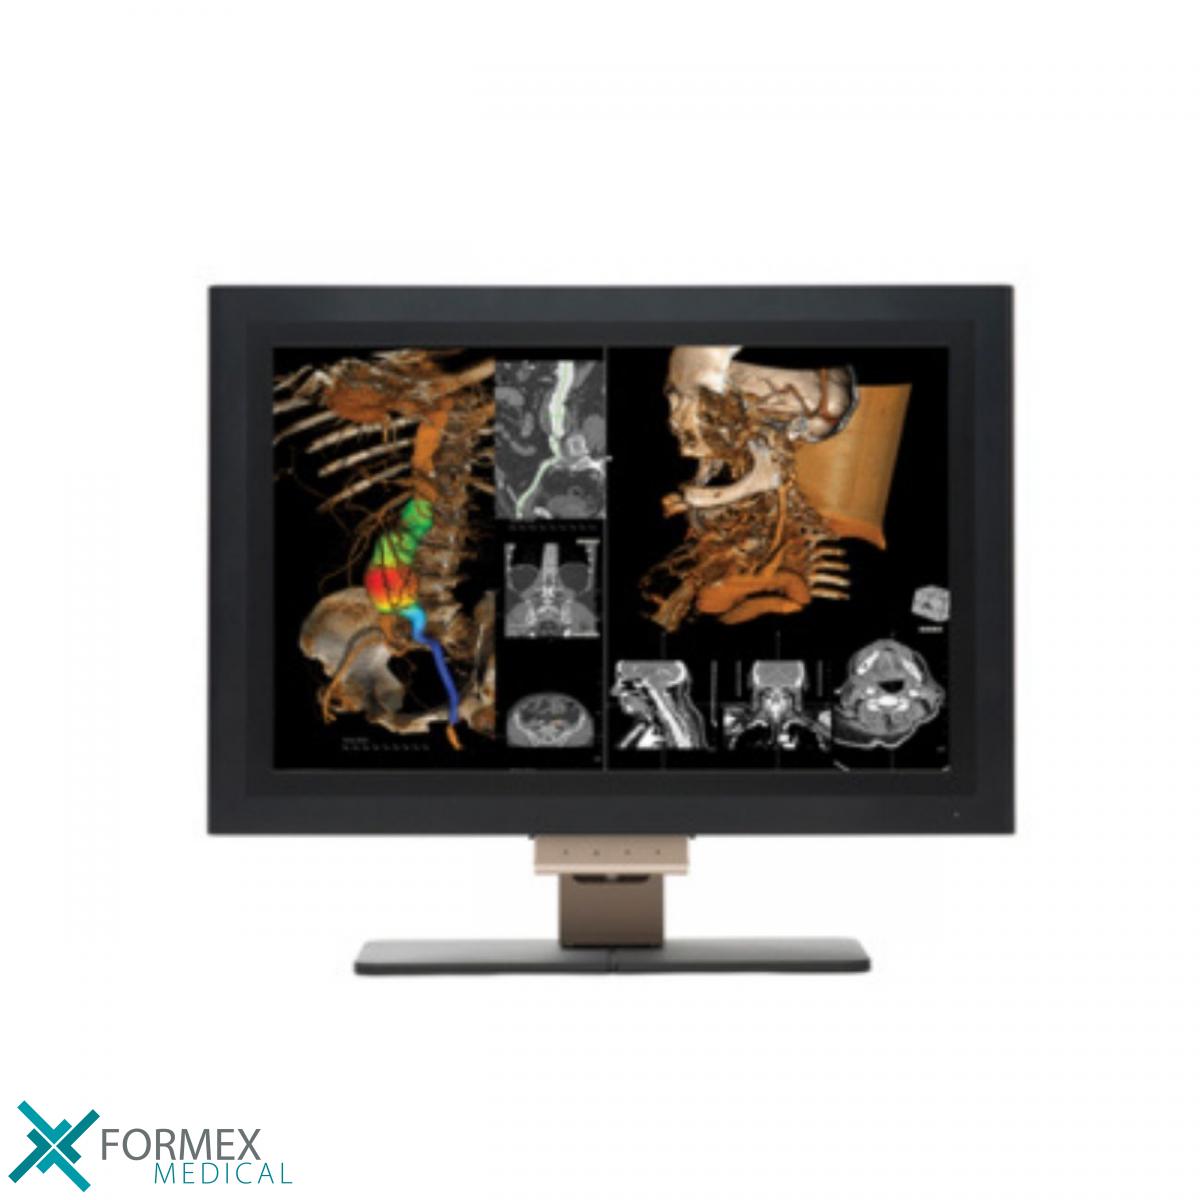 röntgenfoto, MRI, CT-scan, CAT-scan, digitale radiologie, echografie, angiografie, medische beeldvorming, radiografie, hartkath, draagbare röntgenfoto